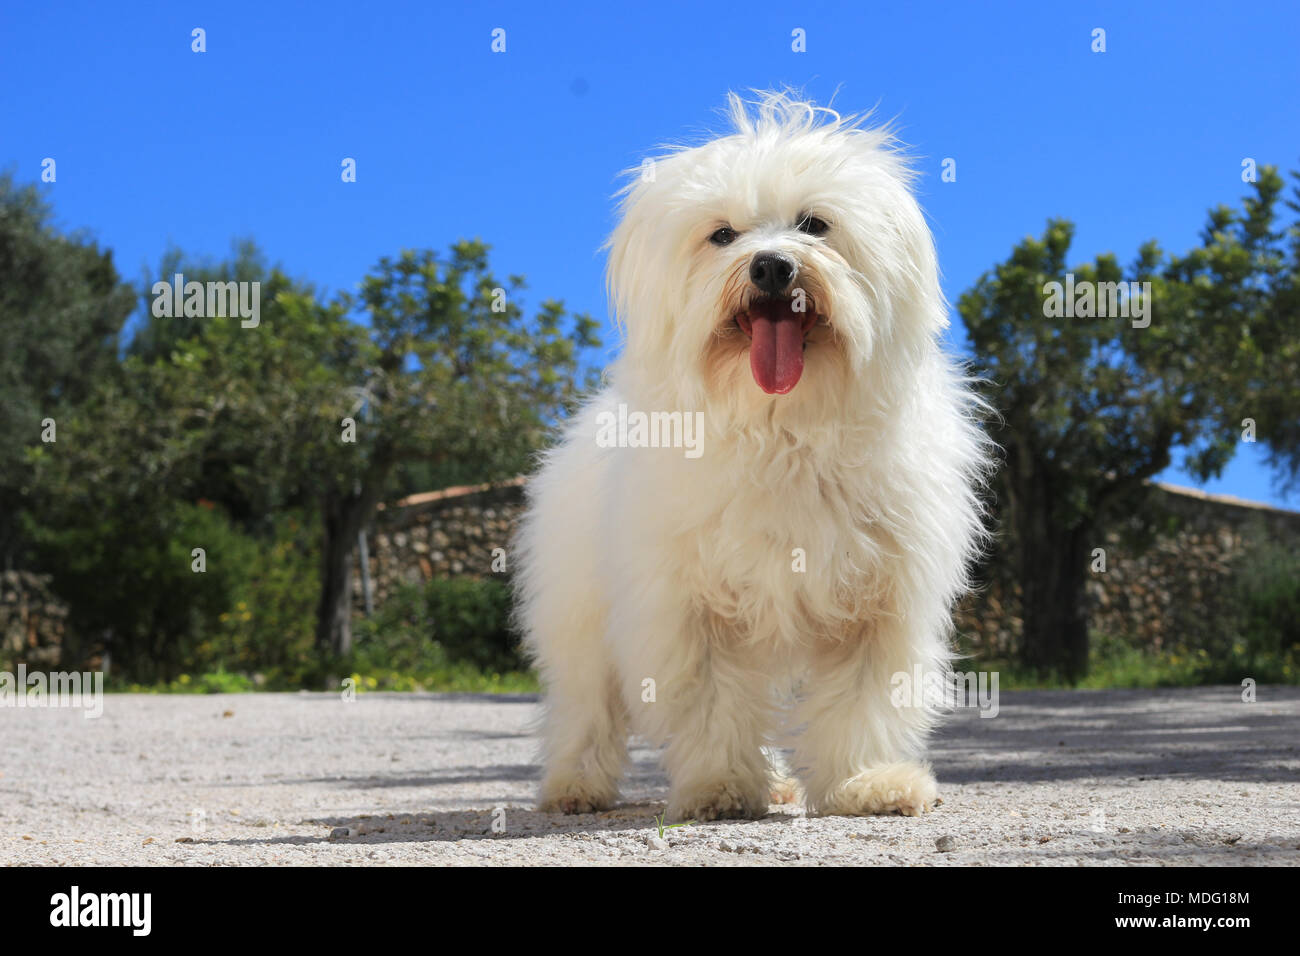 maltese dog standing on a sidewalk Stock Photo